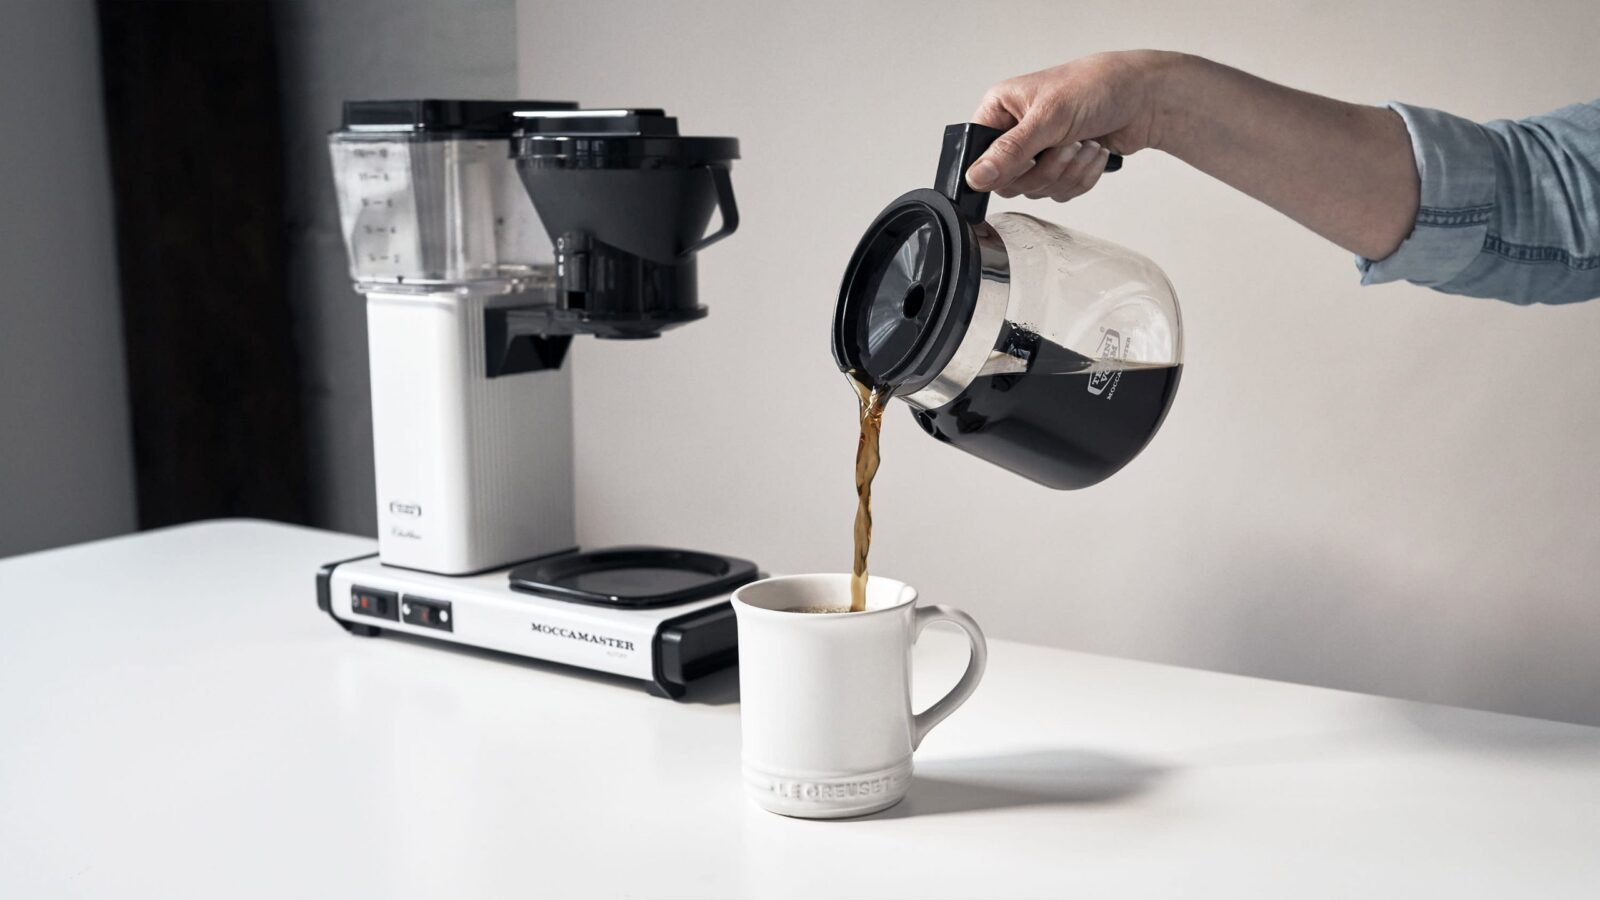 05 TRD20 Coffee Maker Pour scaled - Brazil кофе для френч пресса 37,5 гр.